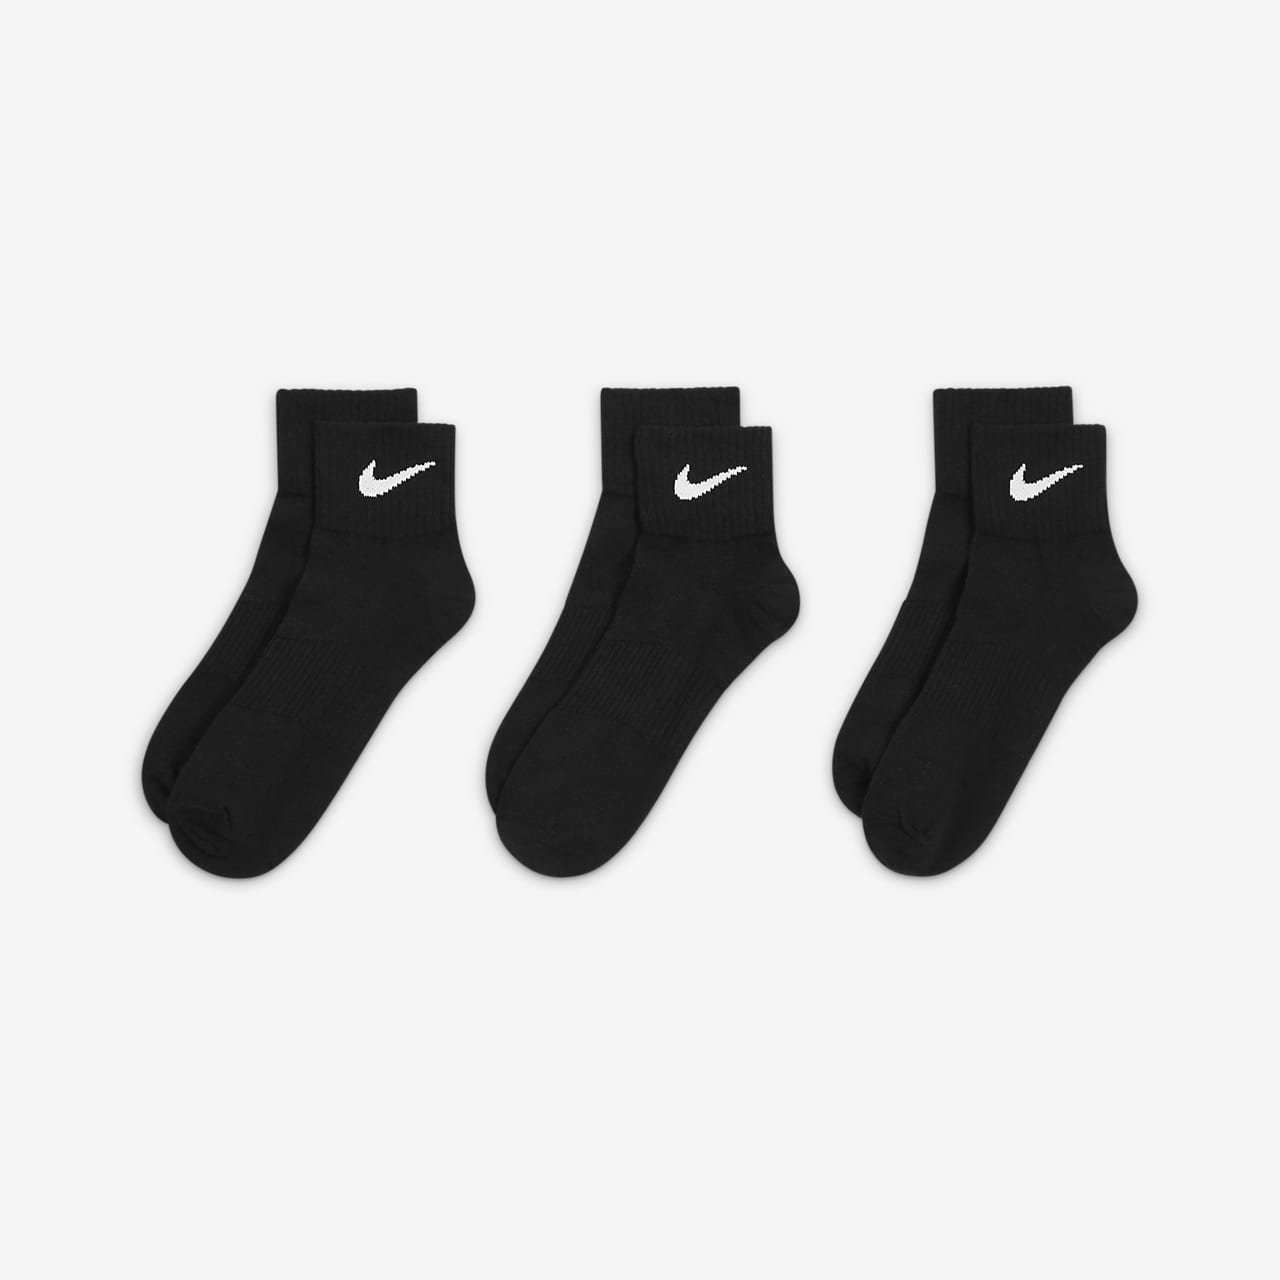 nike lightweight performance socks